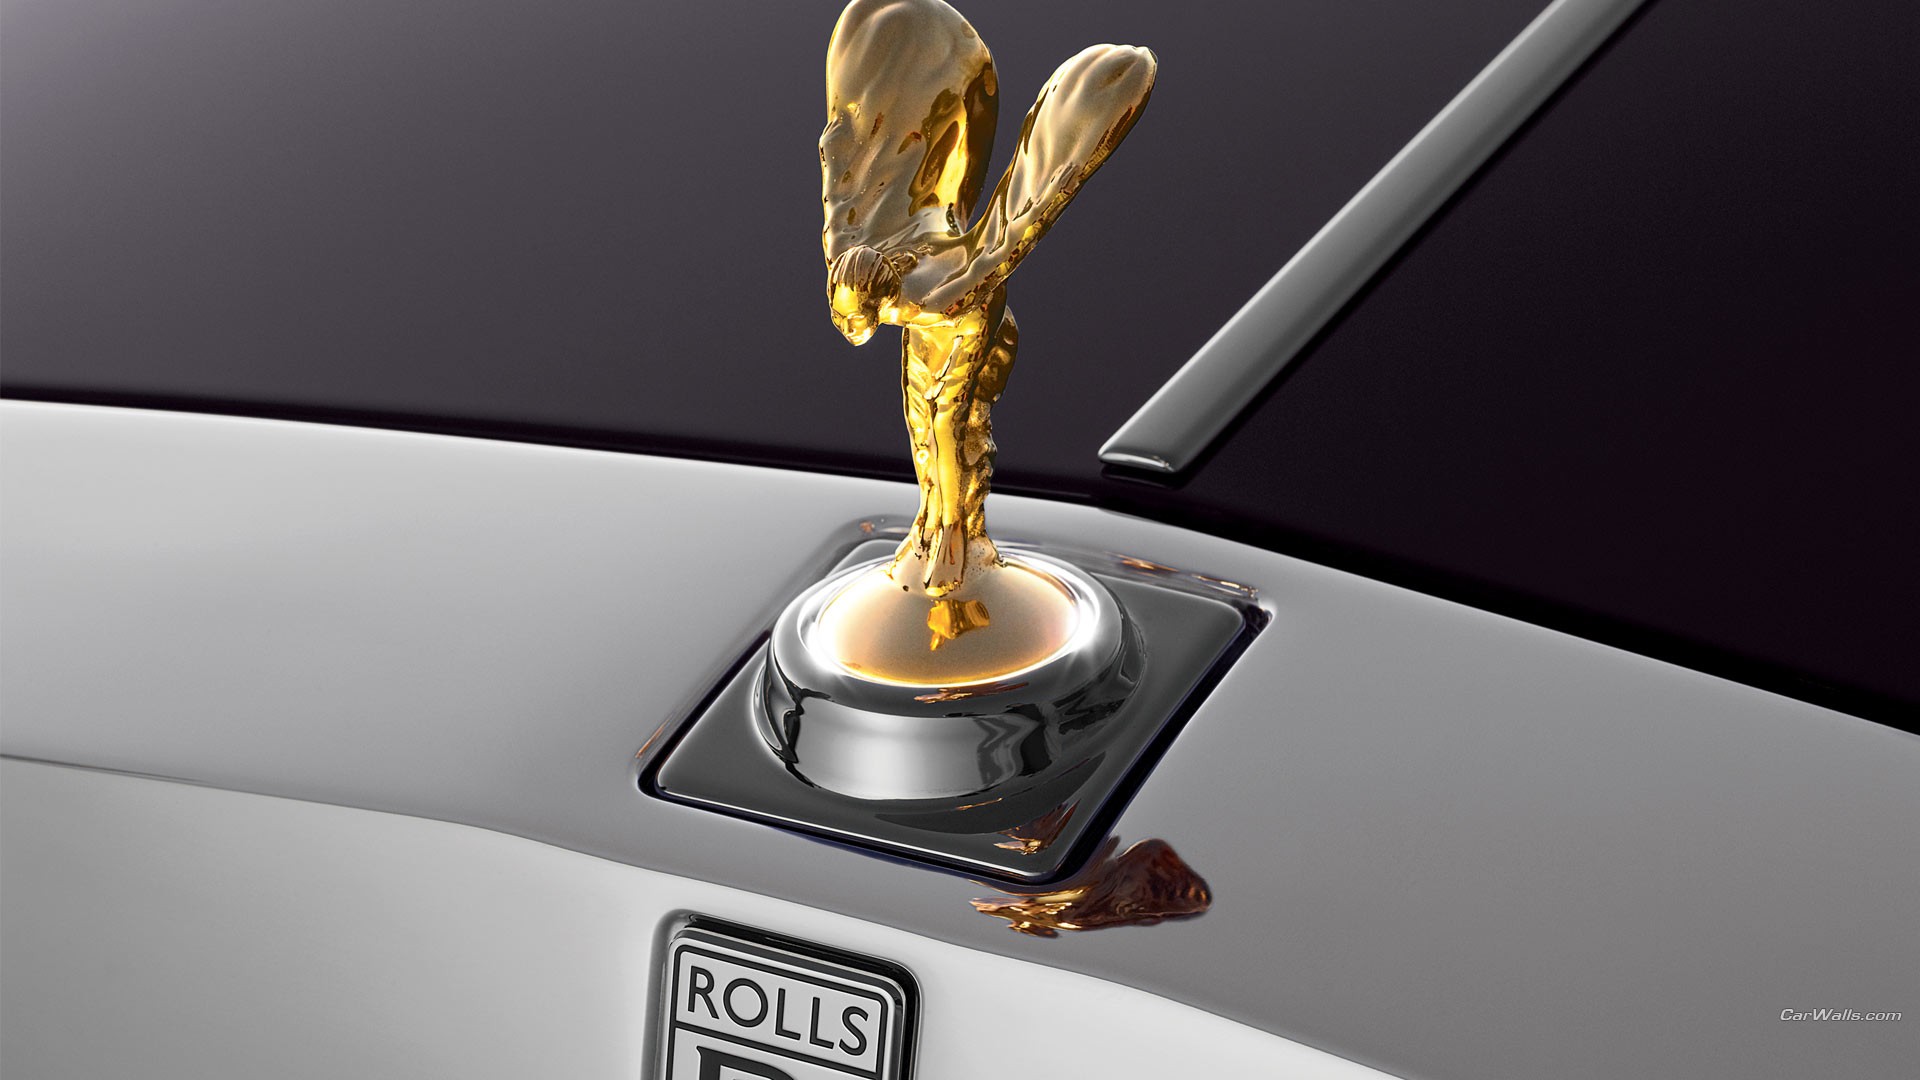 General 1920x1080 car Rolls-Royce Phantom luxury cars Rolls-Royce vehicle British cars